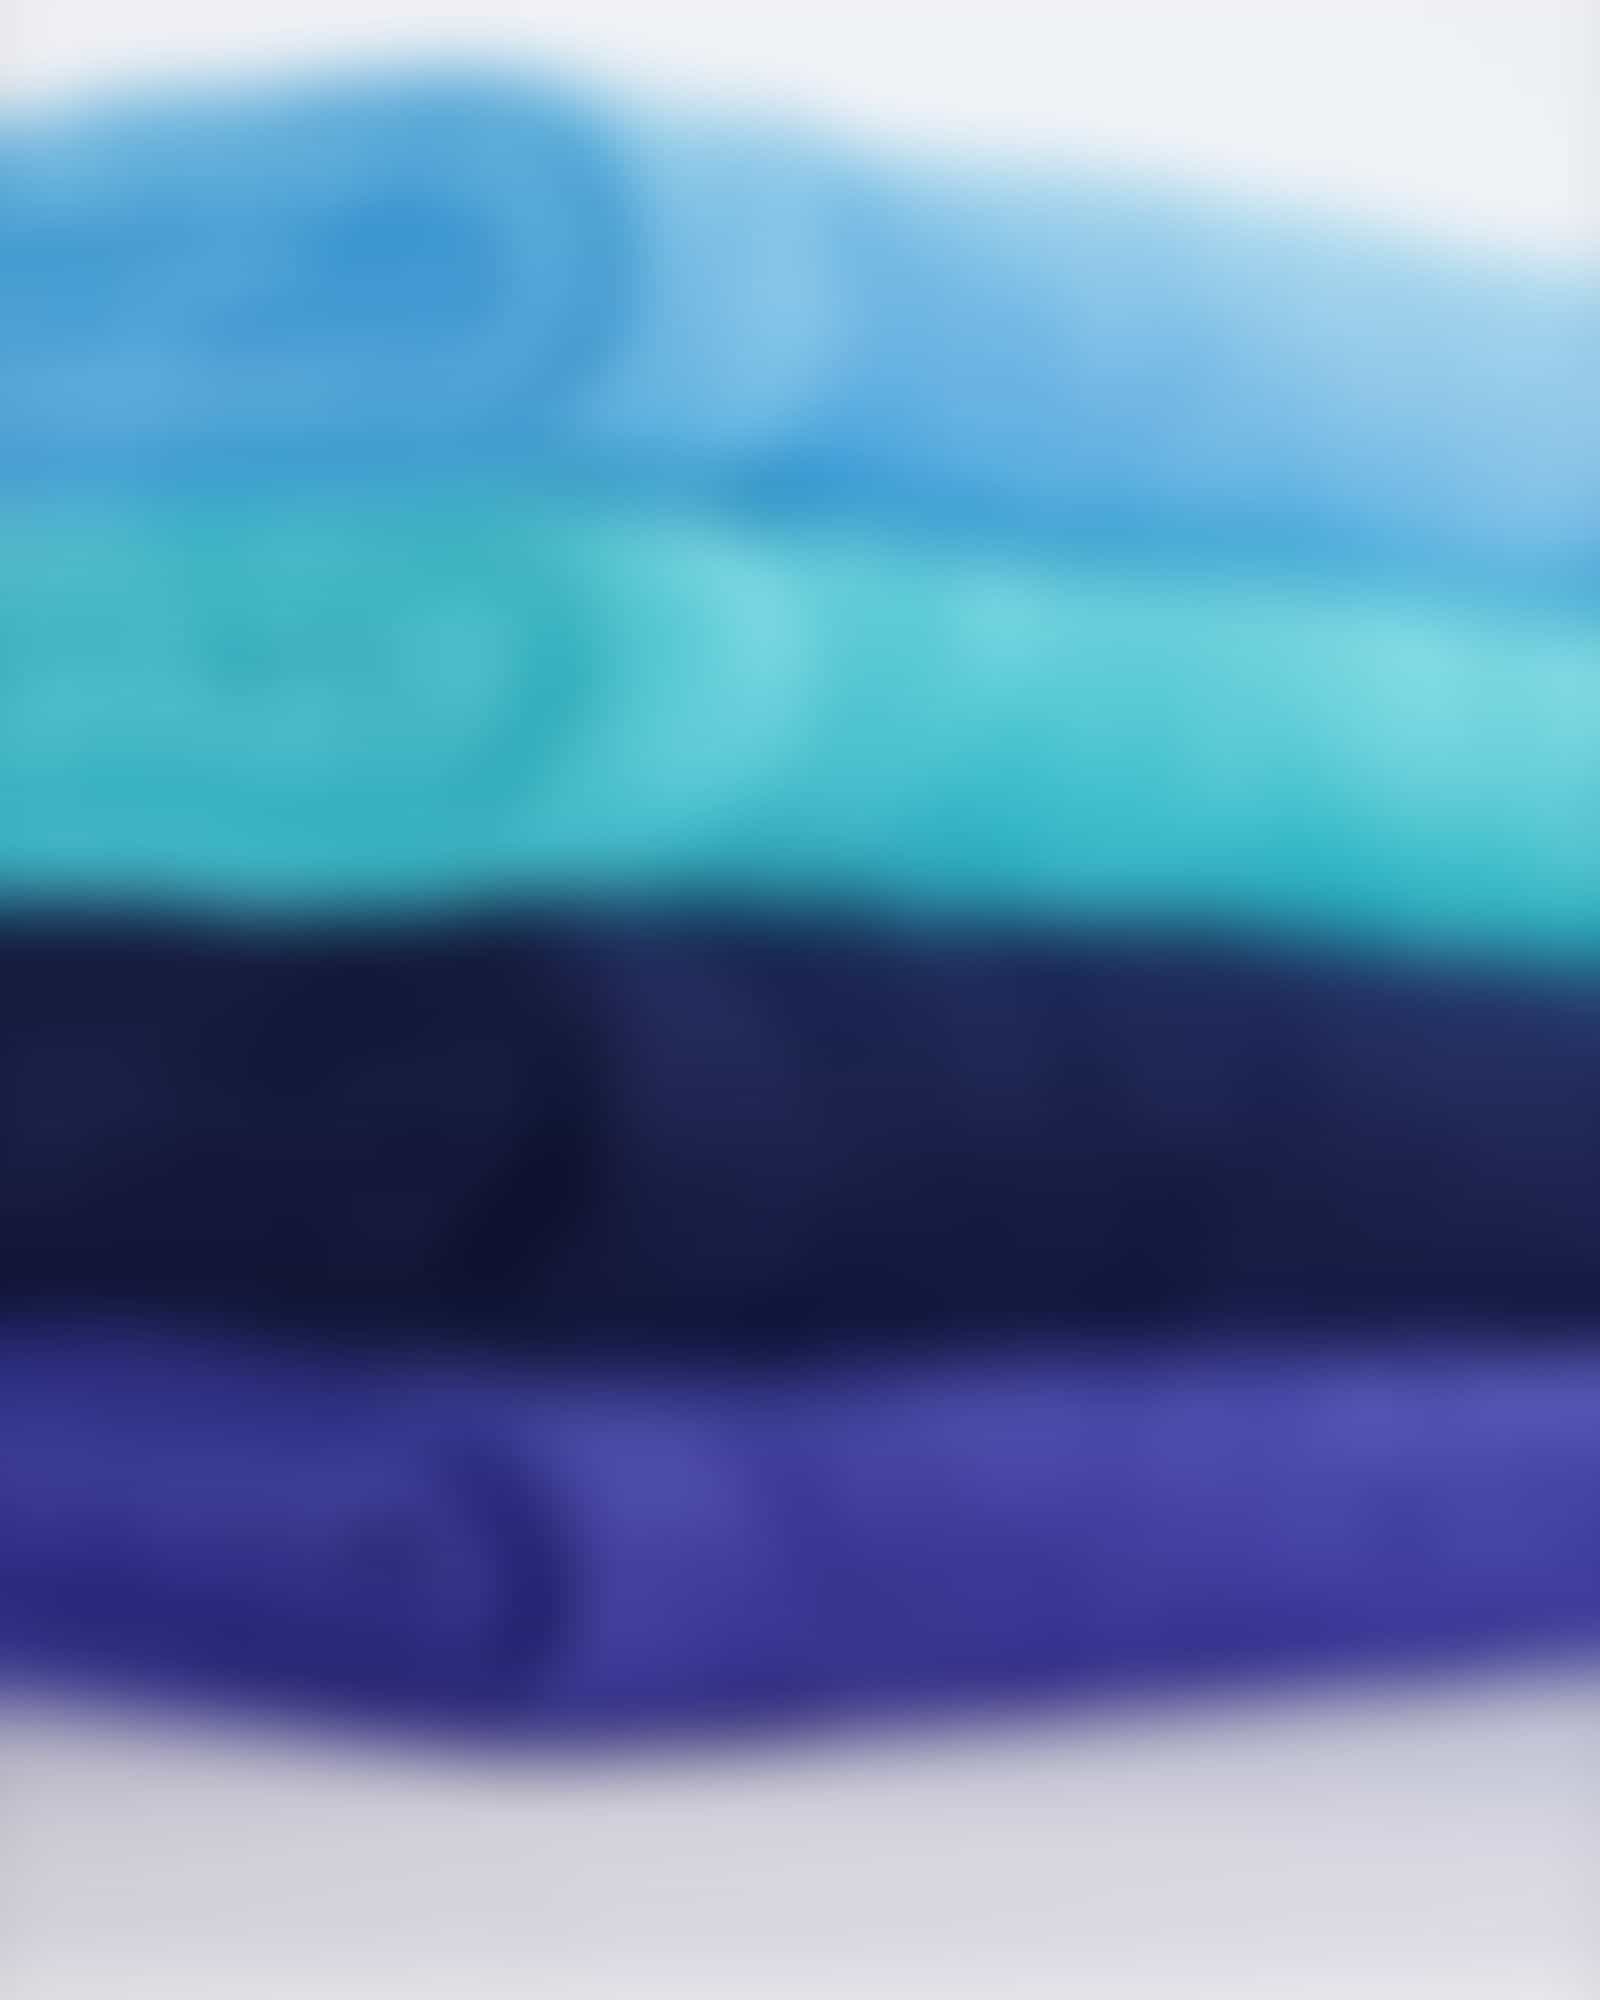 Cawö - Life Style Uni 7007 - Farbe: nachtblau - 111 Duschtuch 70x140 cm